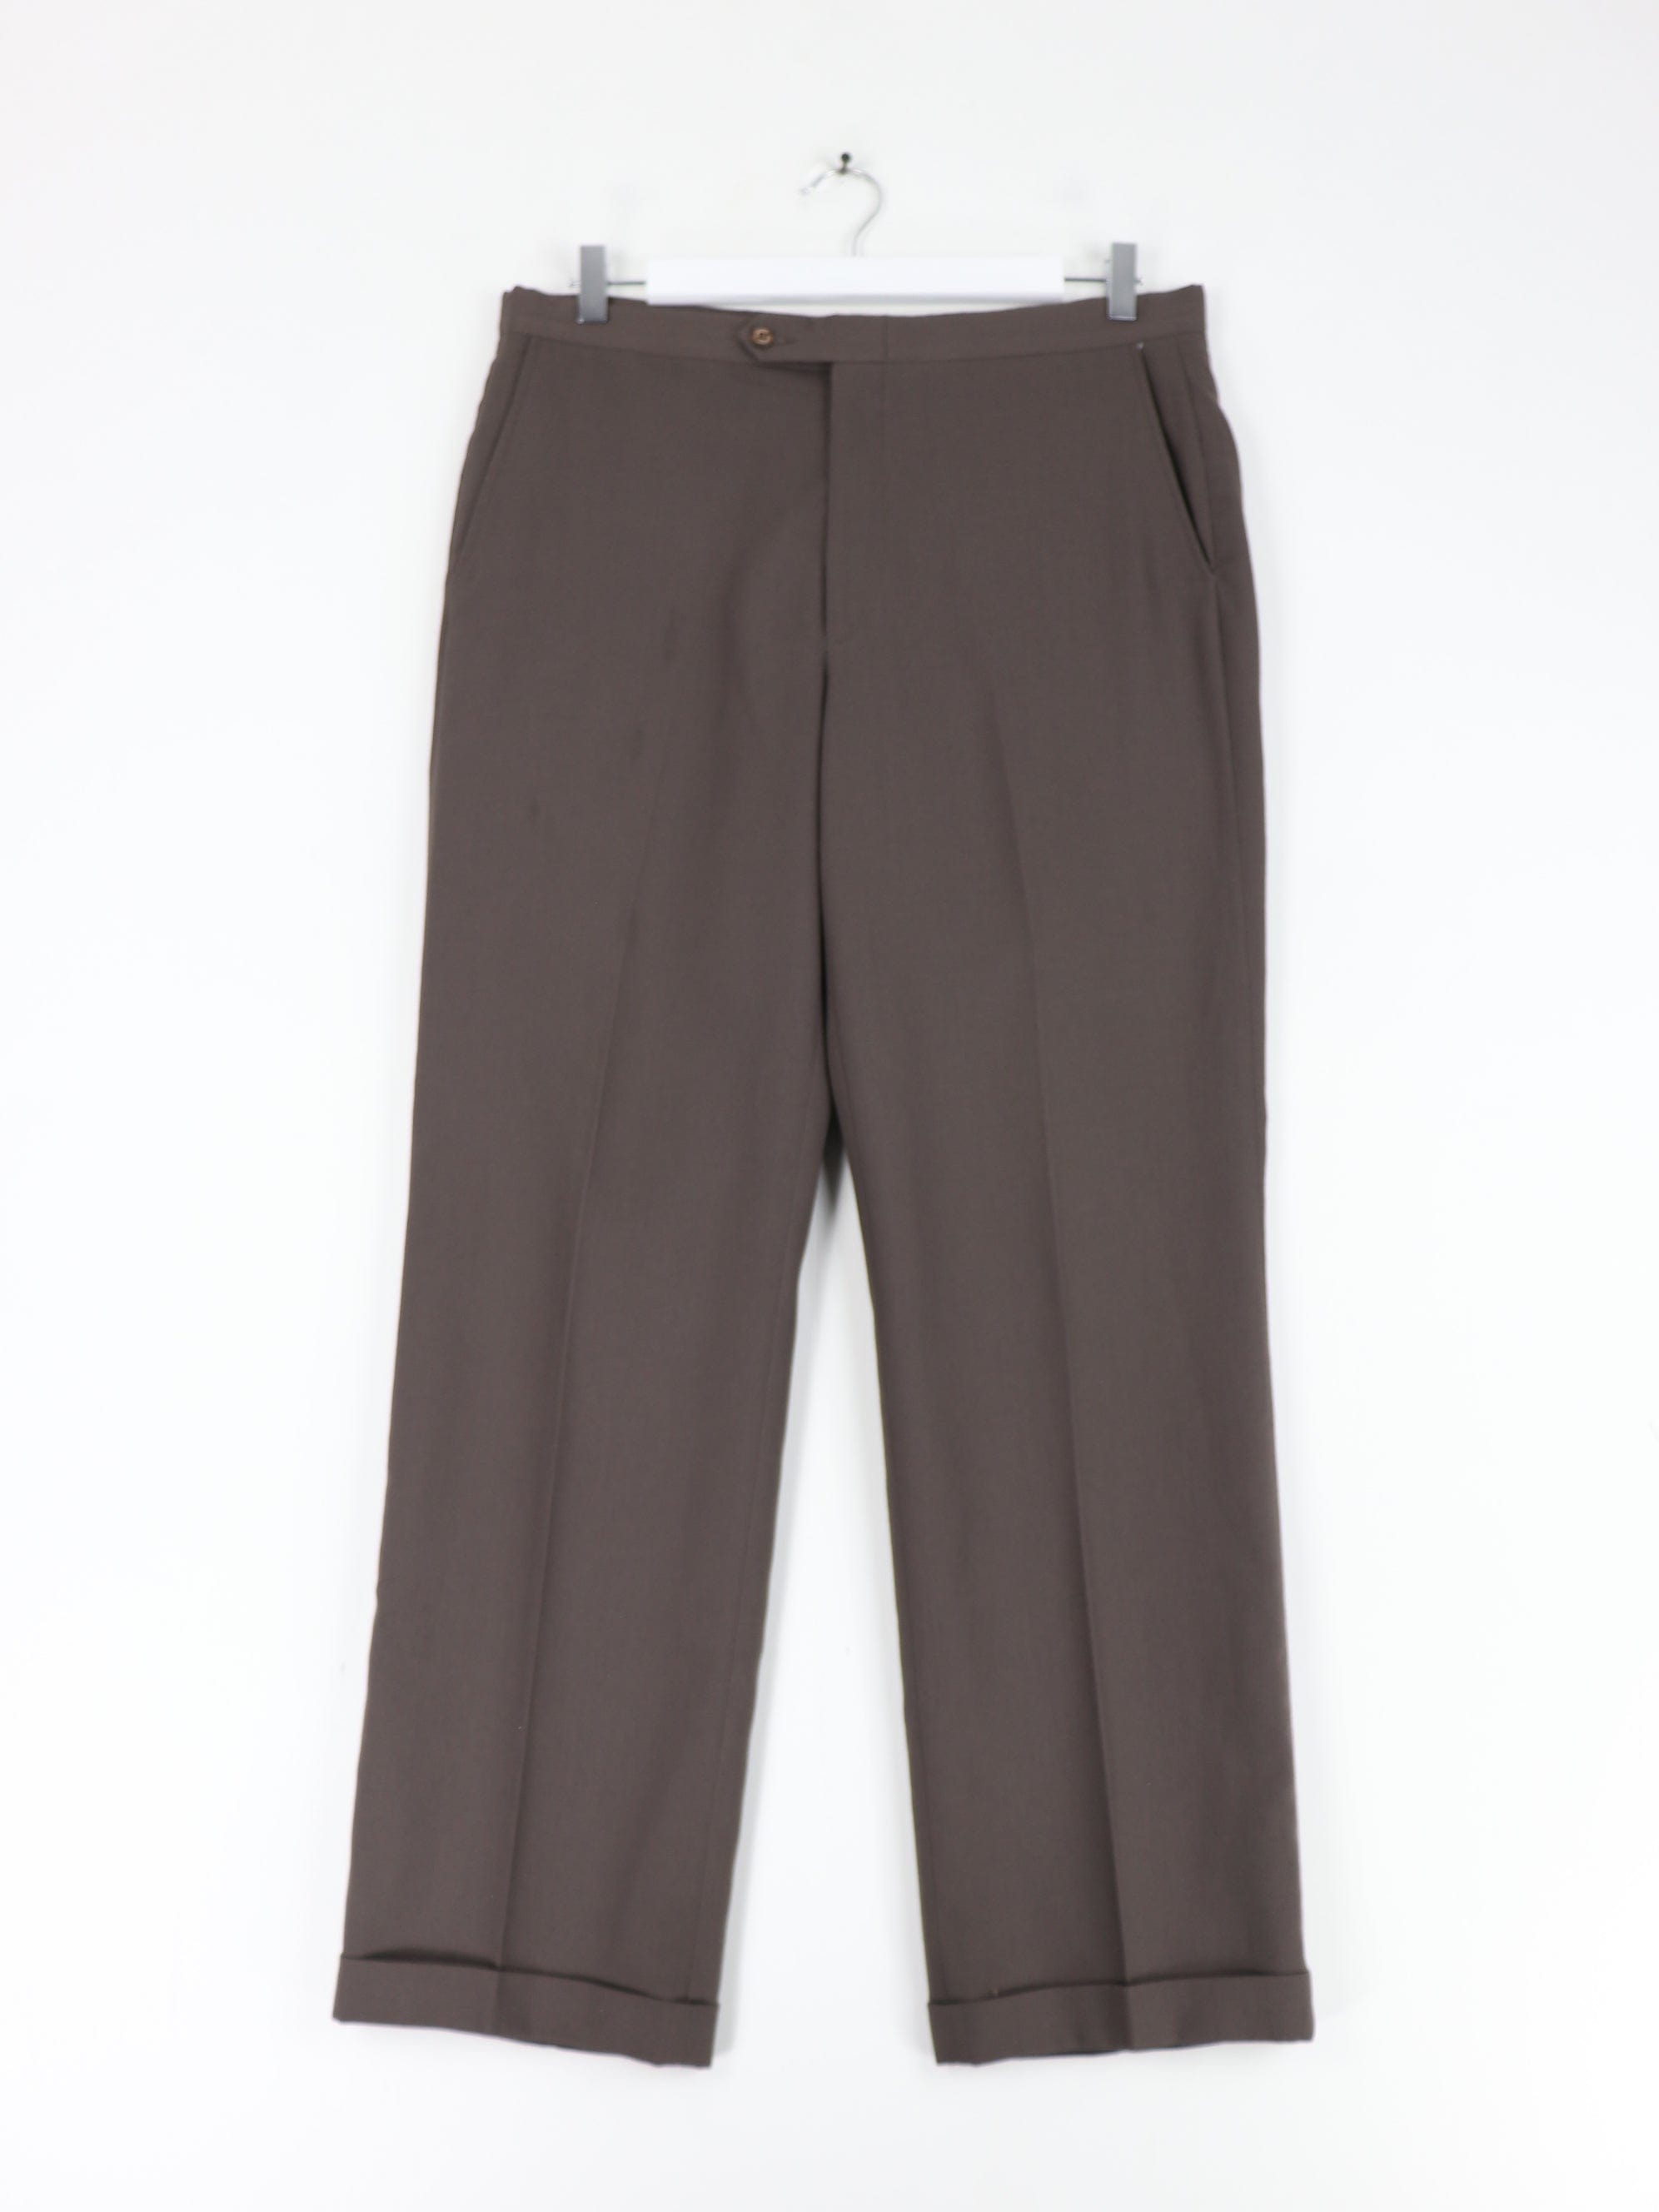 Vintage Jaymar Ruby Pants Mens 34 x 30 Brown Sansabelt Pleated Trousers 70s  80s